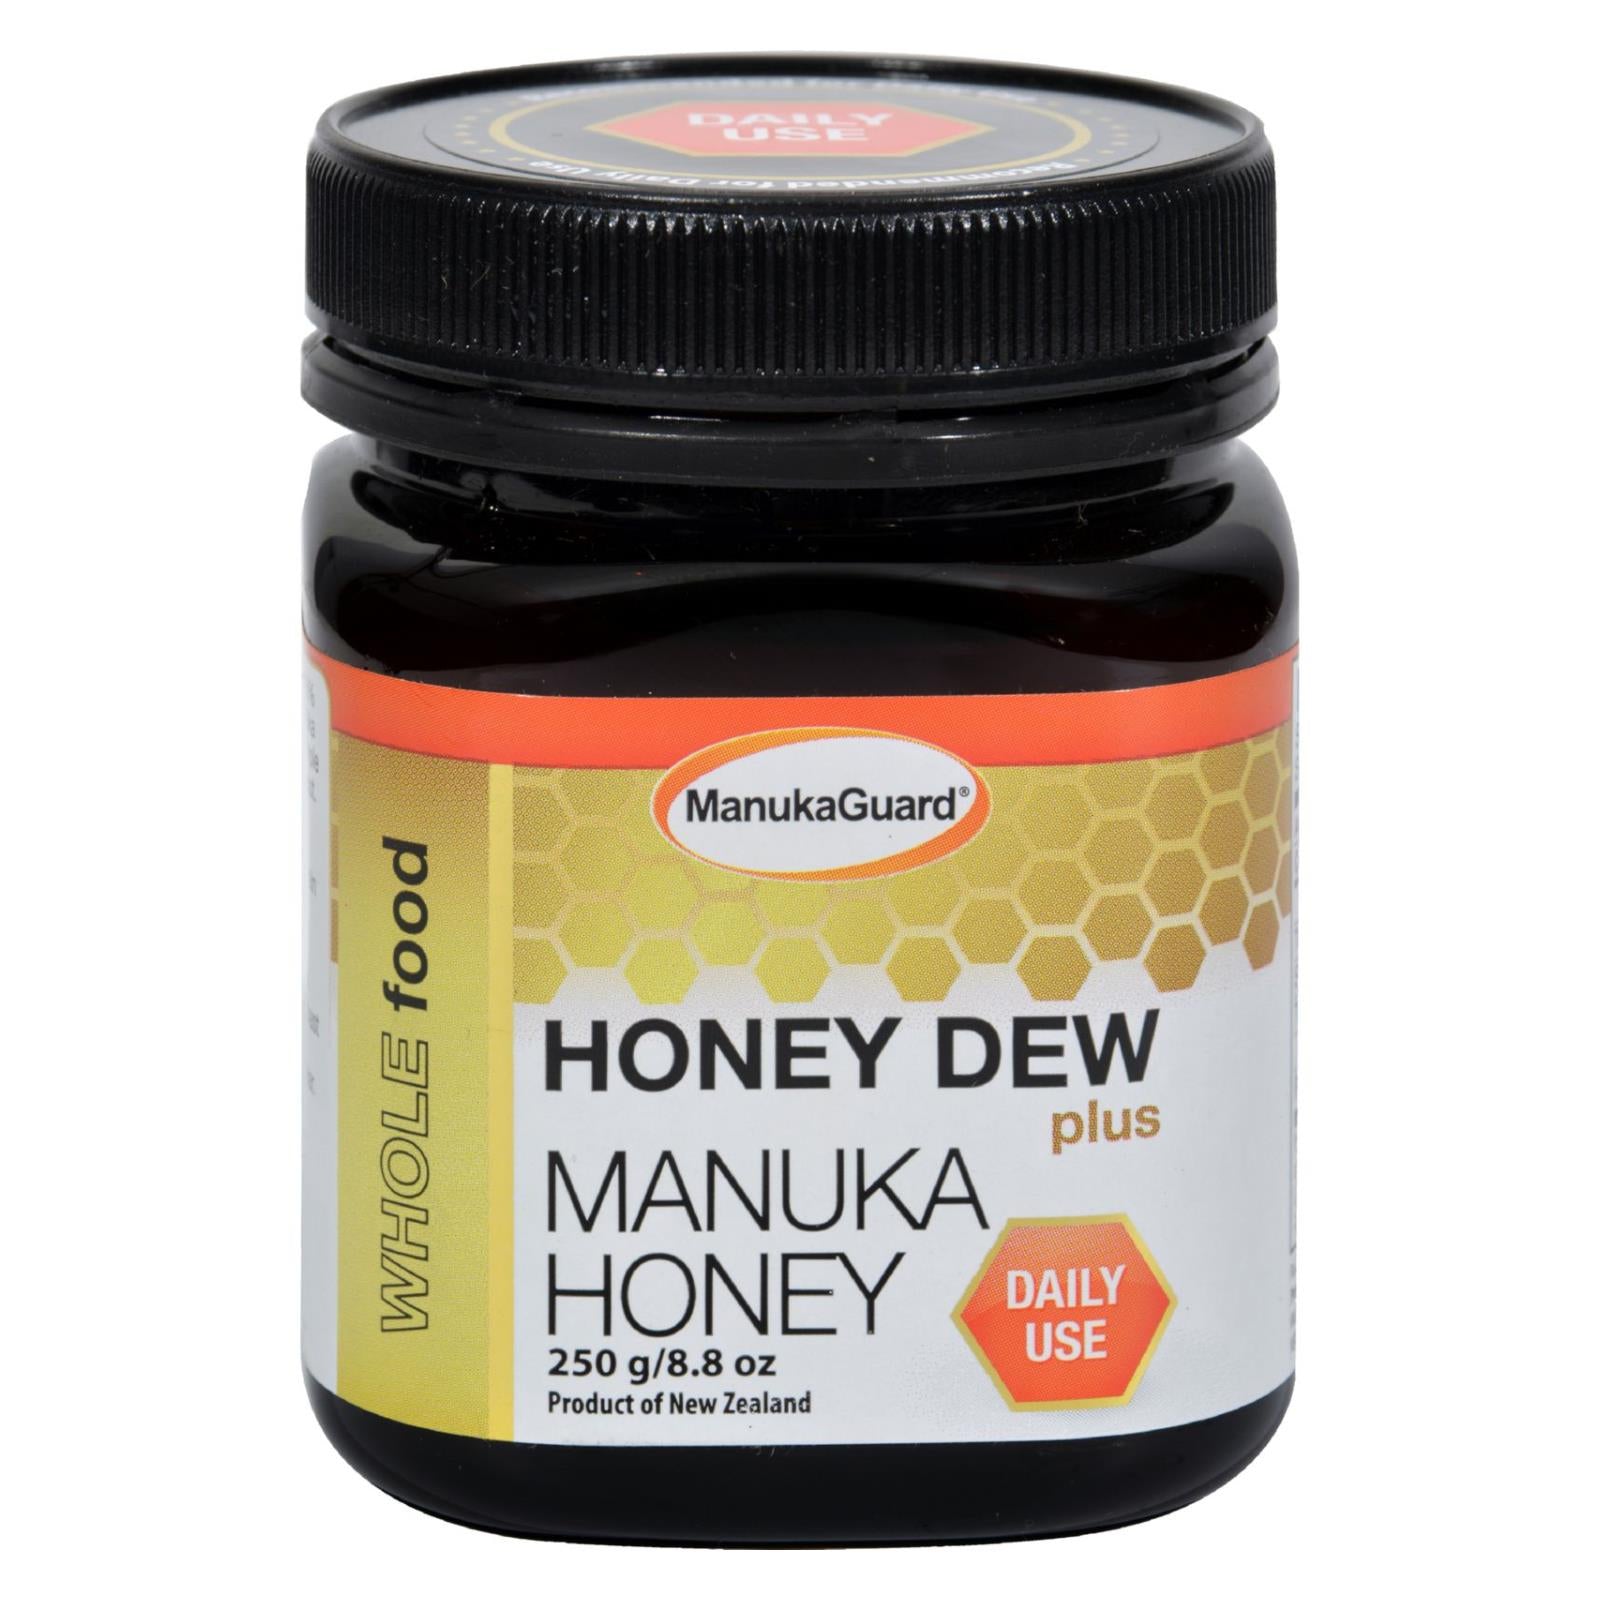 Manukaguard, Manukaguard Miel de Manuka - Honey Dew Plus - 8.8 oz